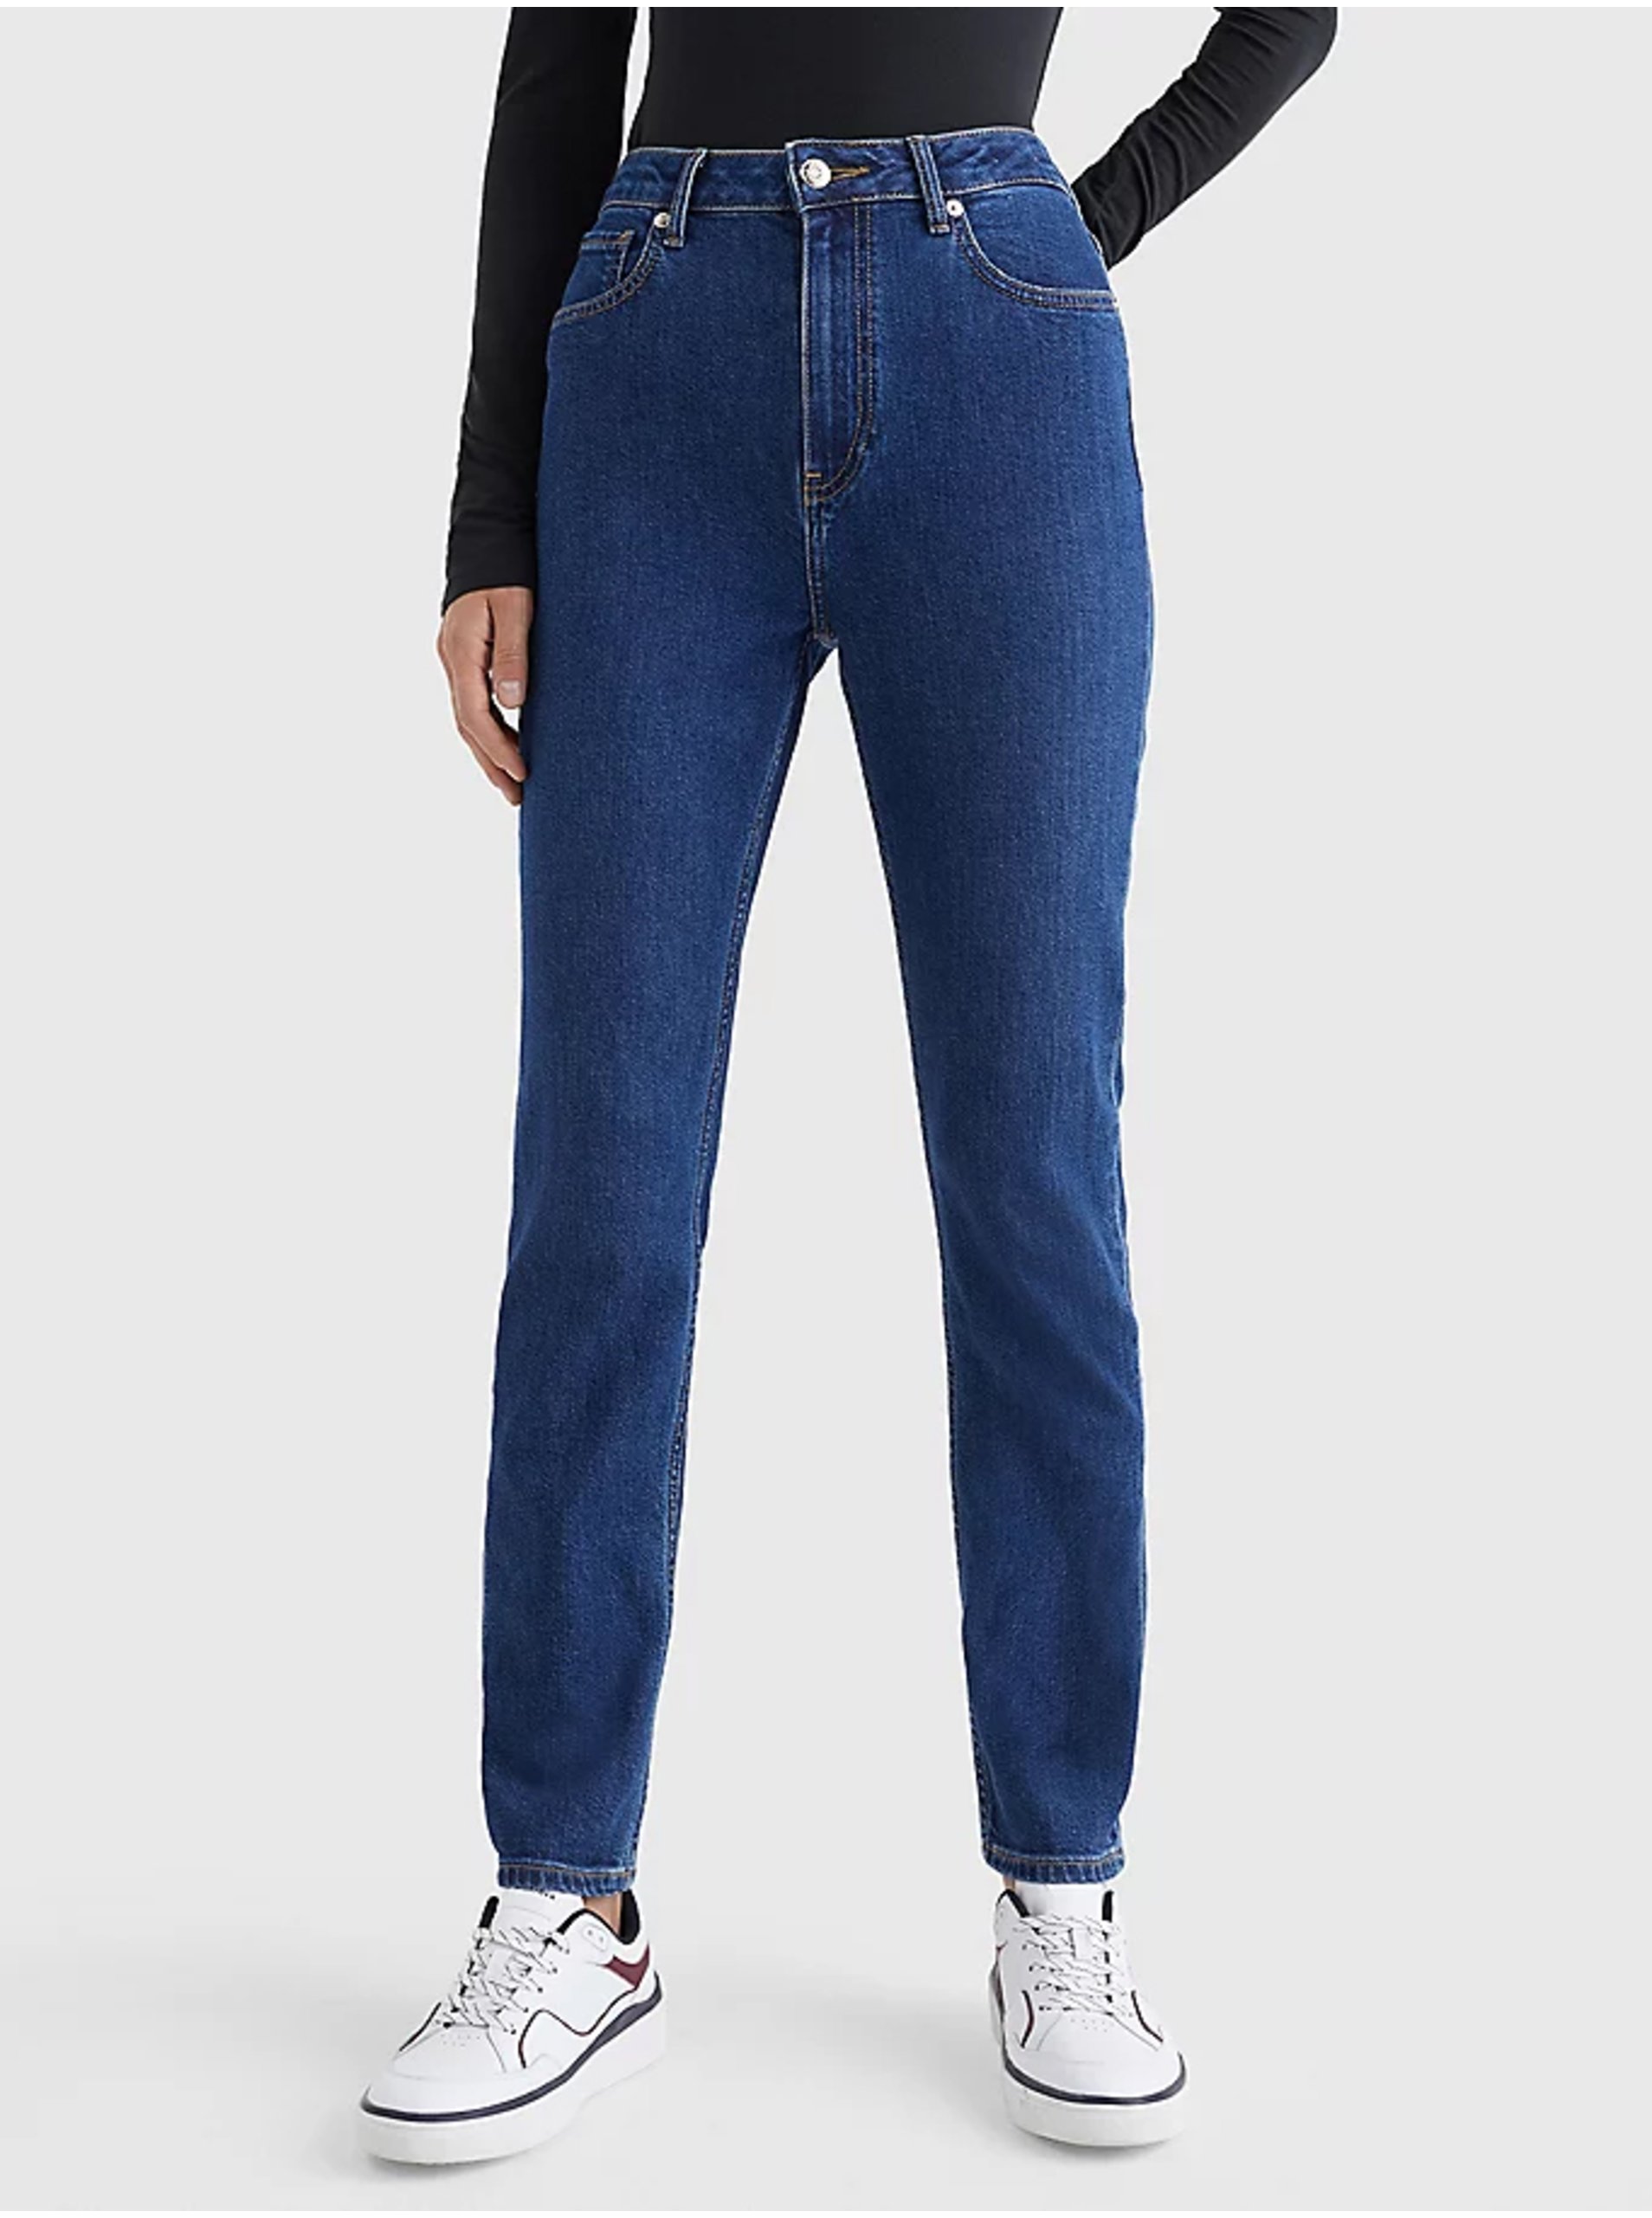 Dark blue womens slim fit jeans Tommy Hilfiger - Women